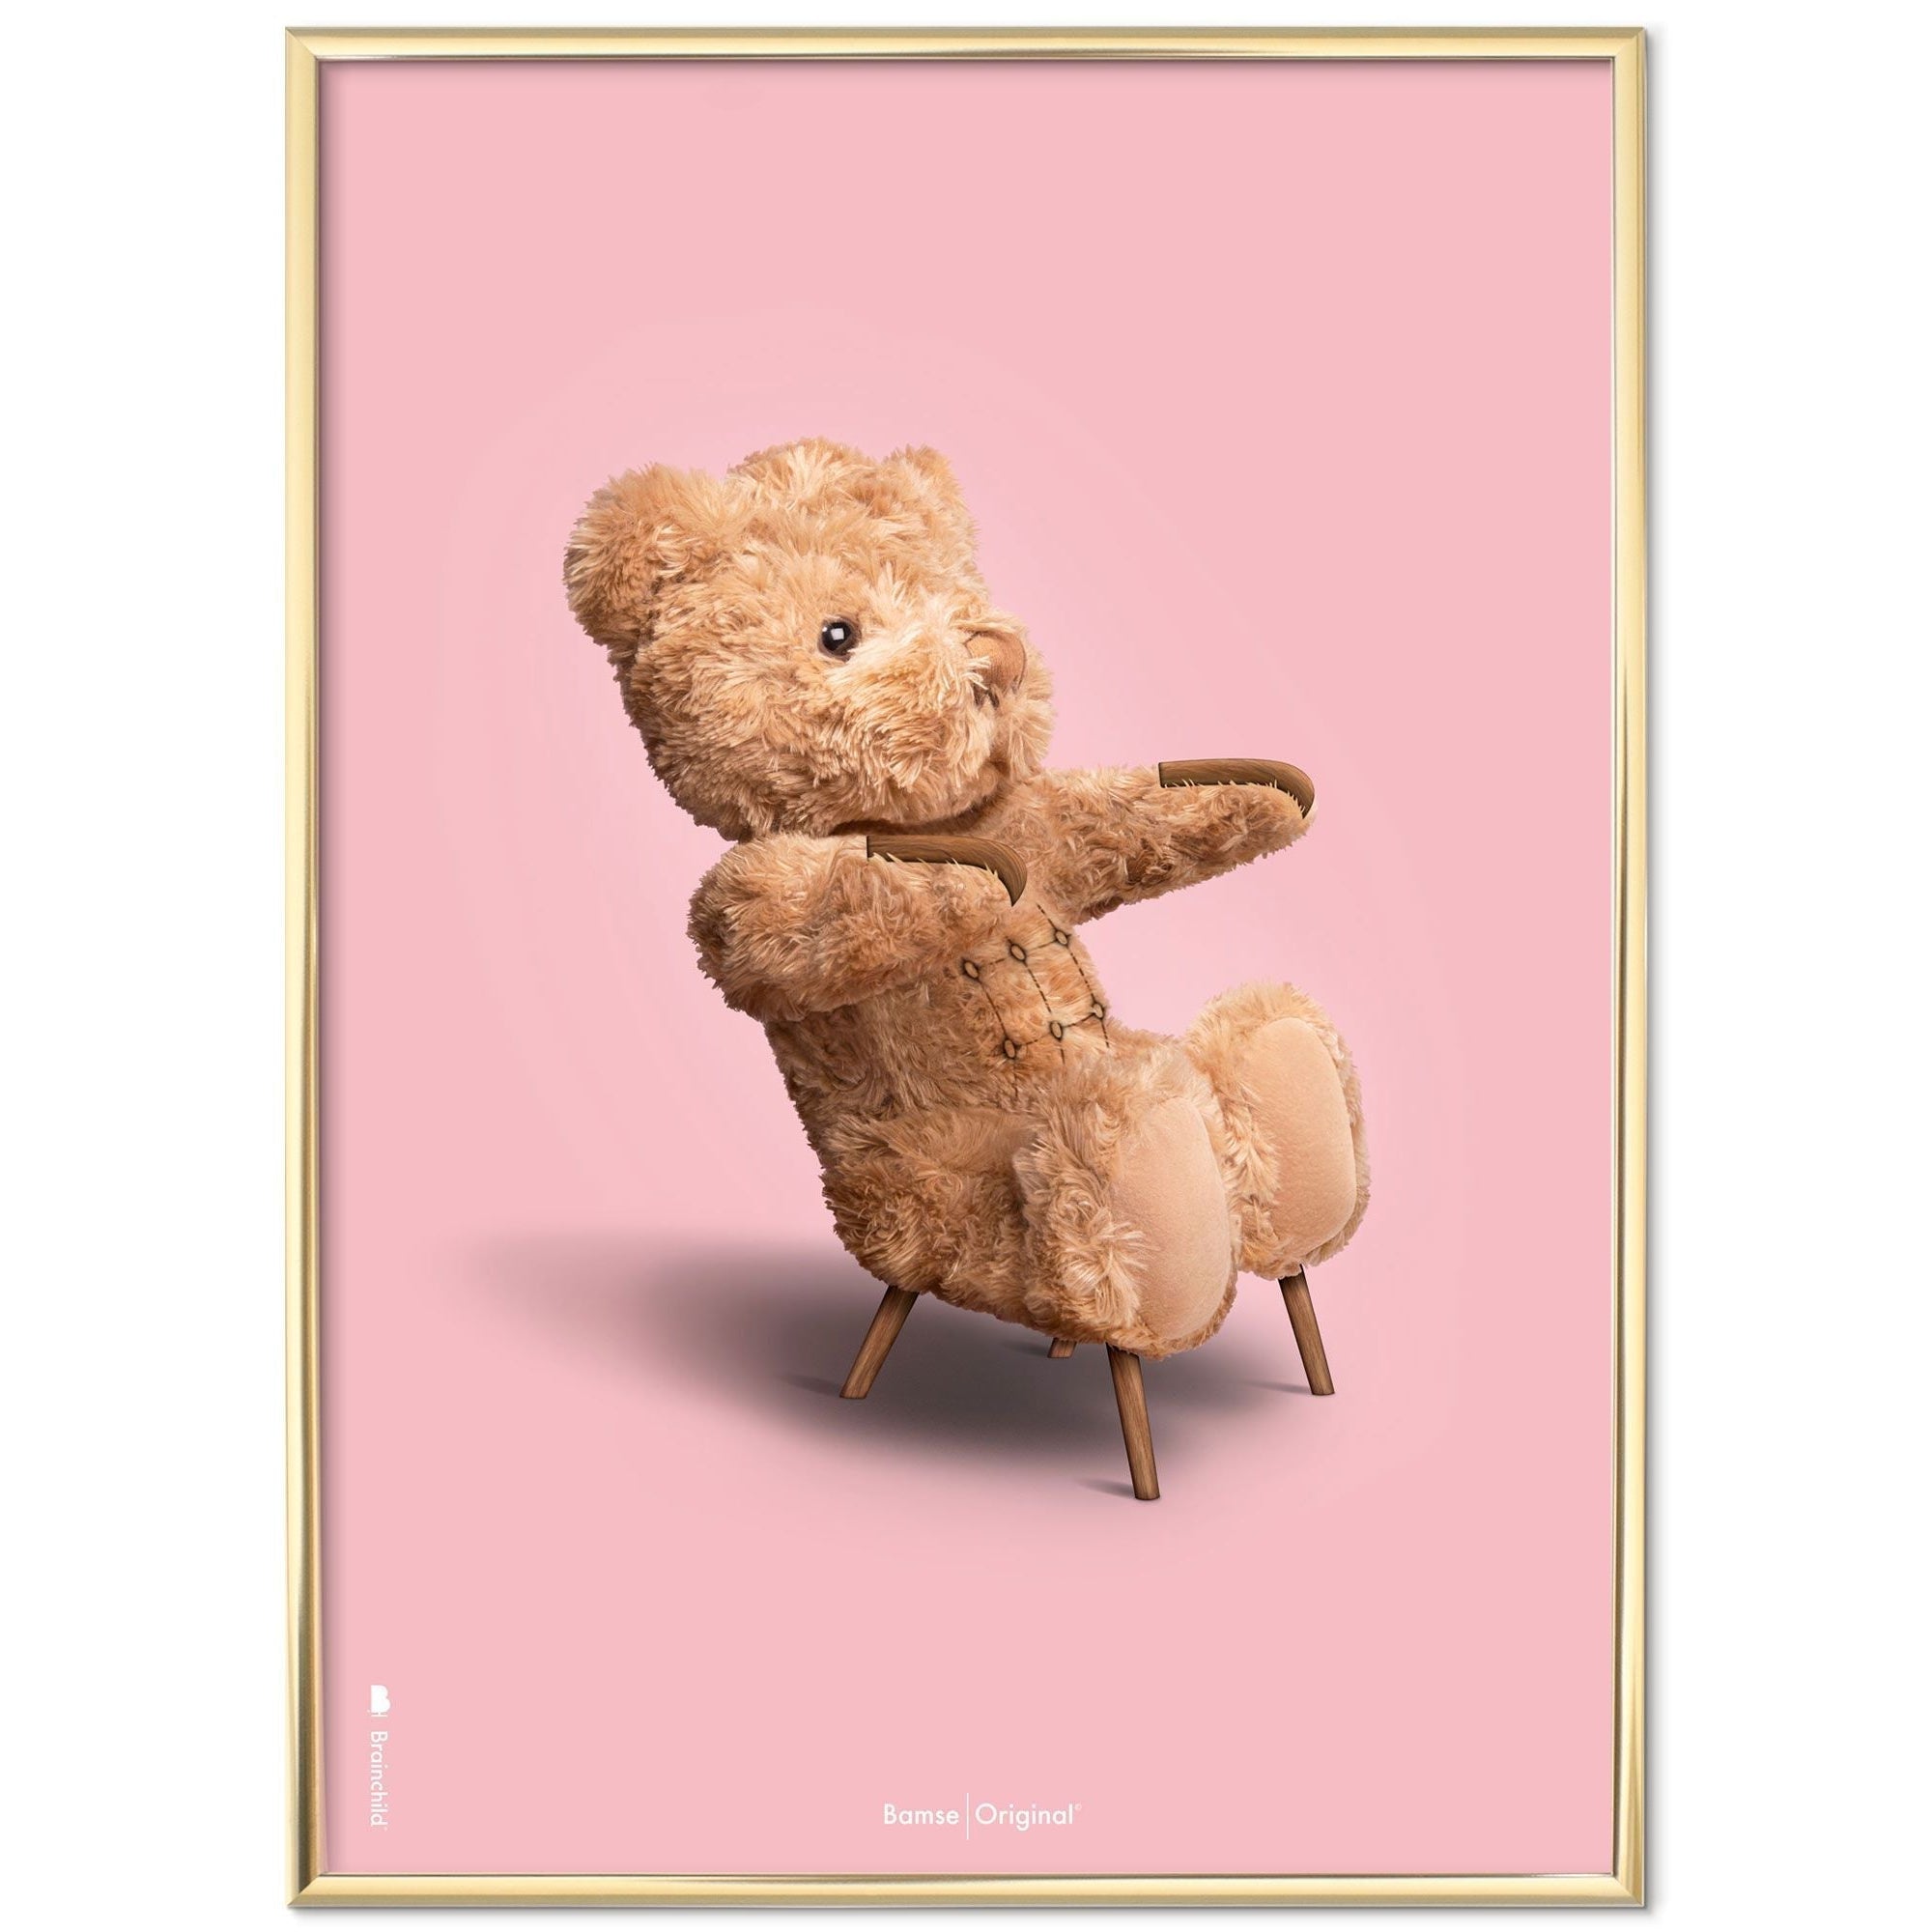 Brainchild Teddybeer klassieke poster messing gekleurd frame 70x100 cm, roze achtergrond